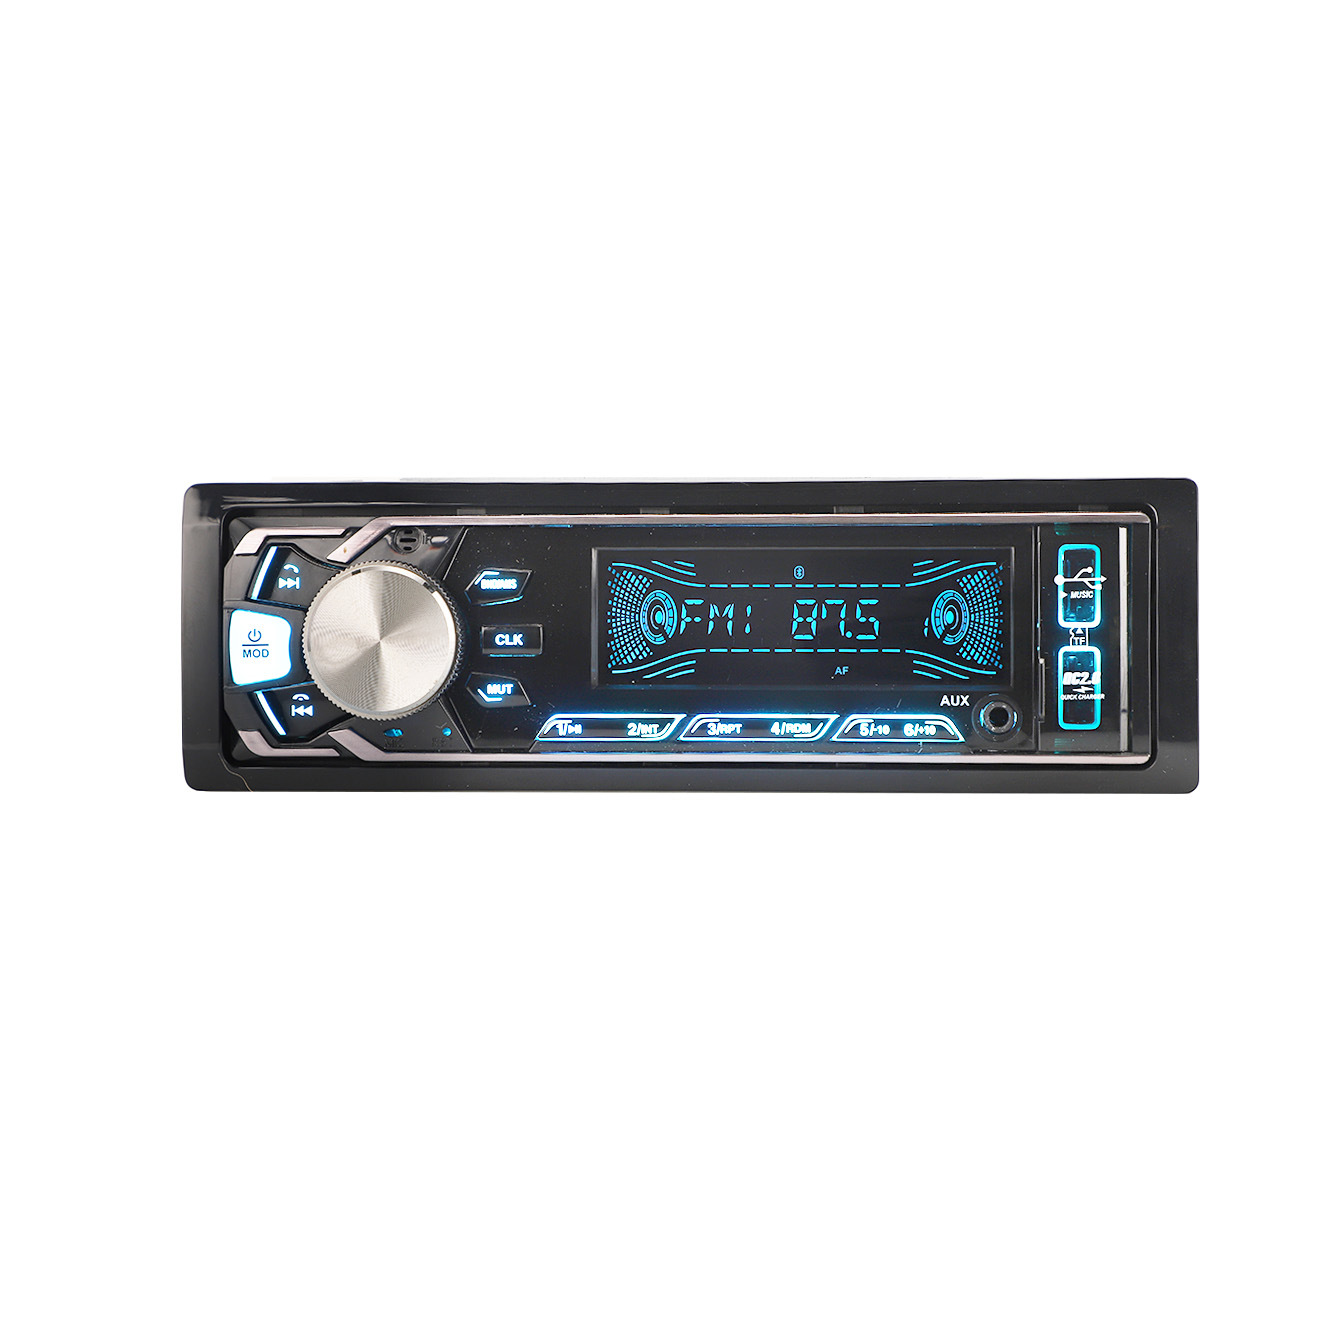 MP3-плеер Автомобильное зарядное устройство MP3-плеер Автомобильный MP3-плеер с фиксированной панелью на один стандарт DIN